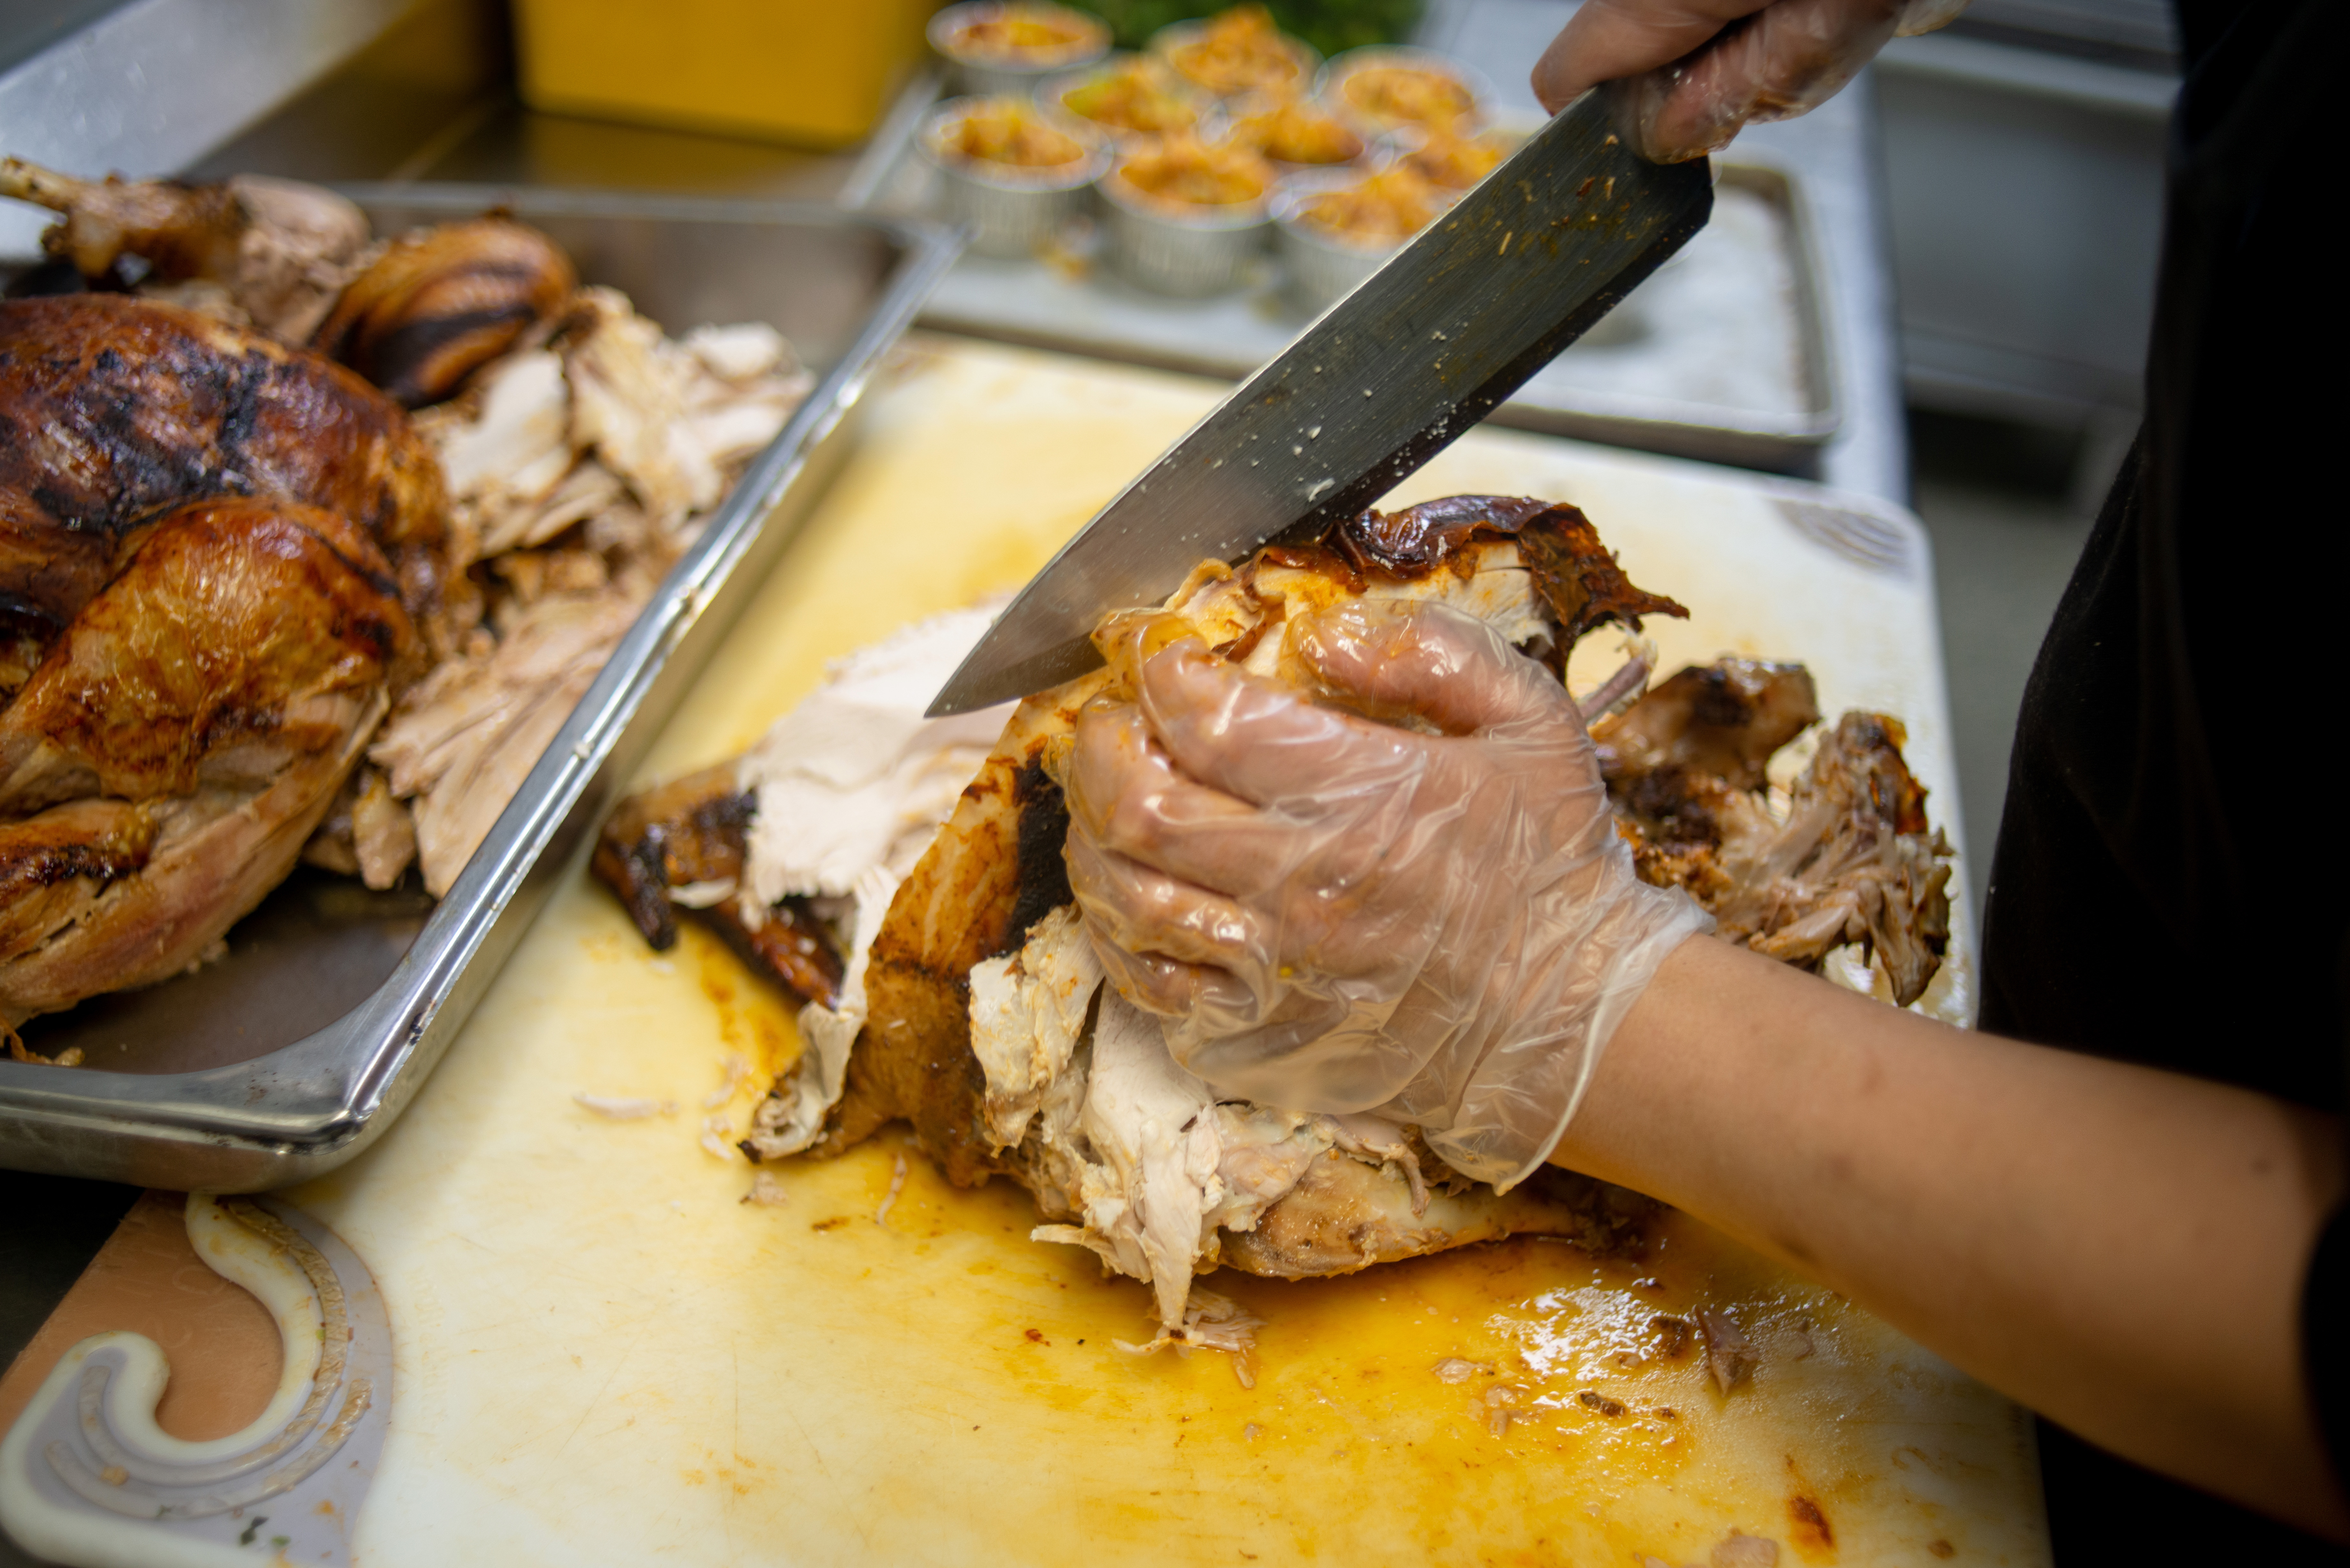 A Thanksgiving Turkey being prepared for a dinner near Manhattan's Lincoln Center in 2020.